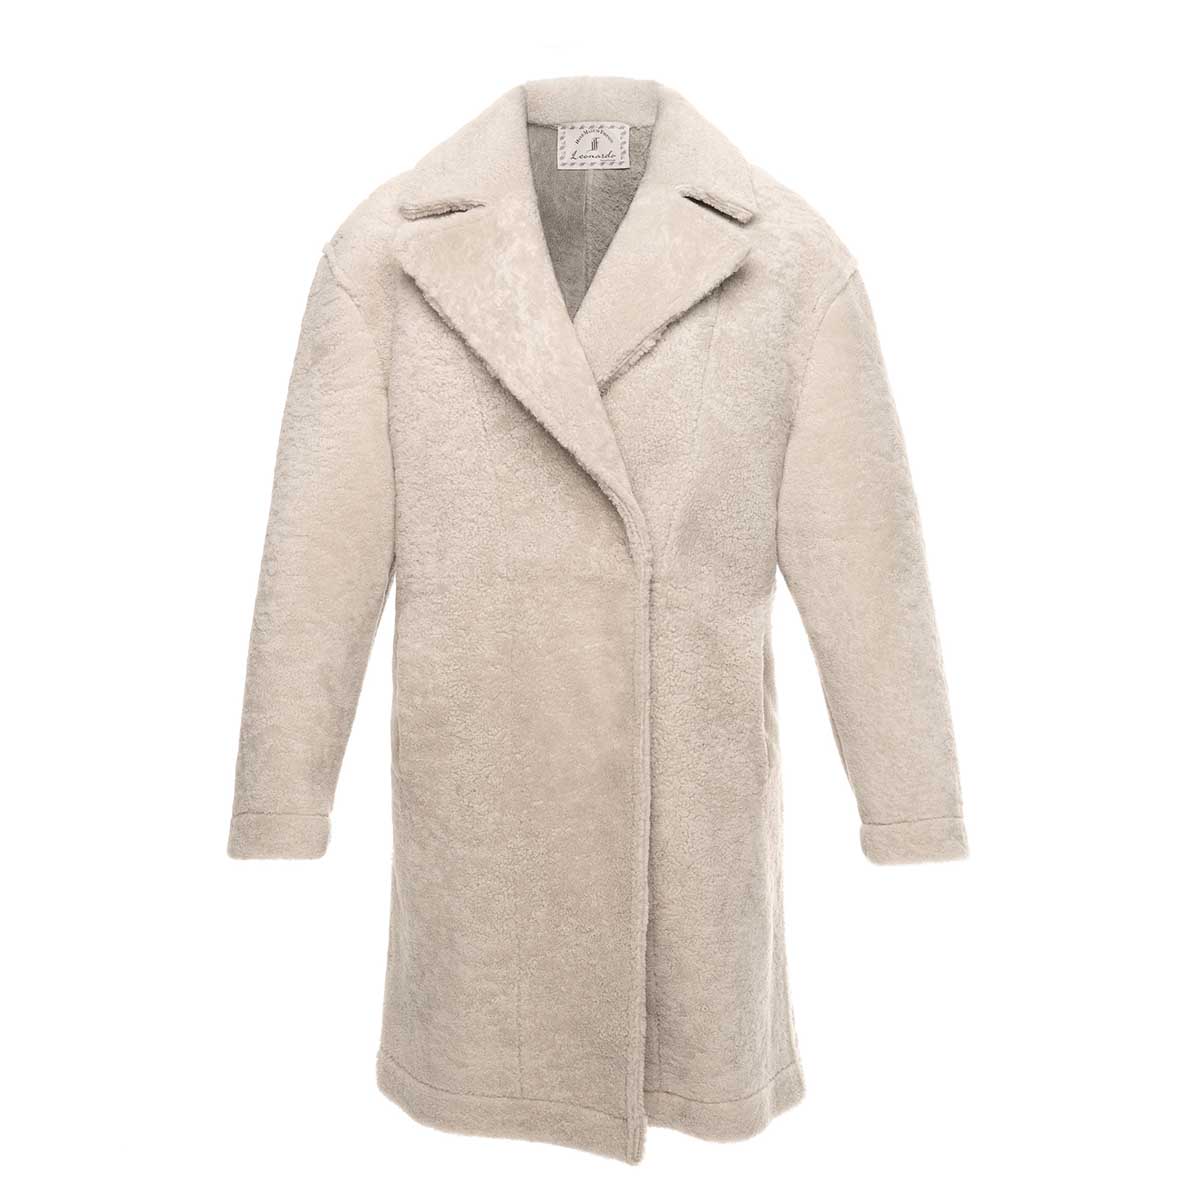 Long beige women's sheepskin coat with buttons